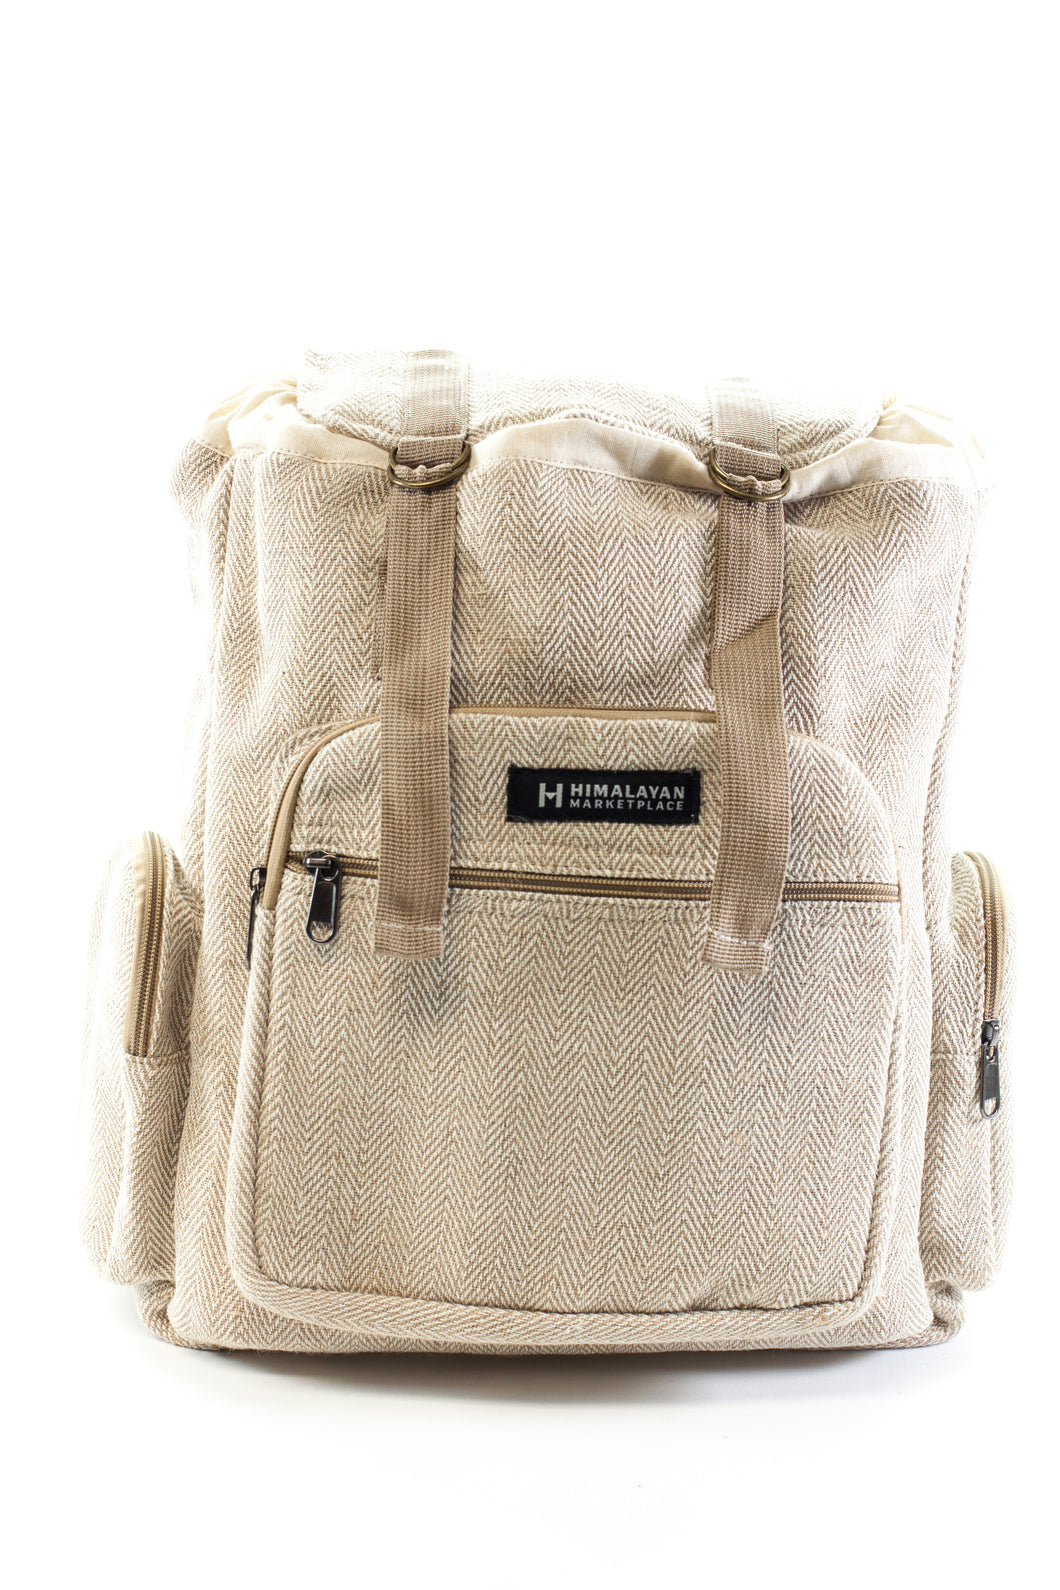 Handmade Cotton Unisex Bag - HMPCB2